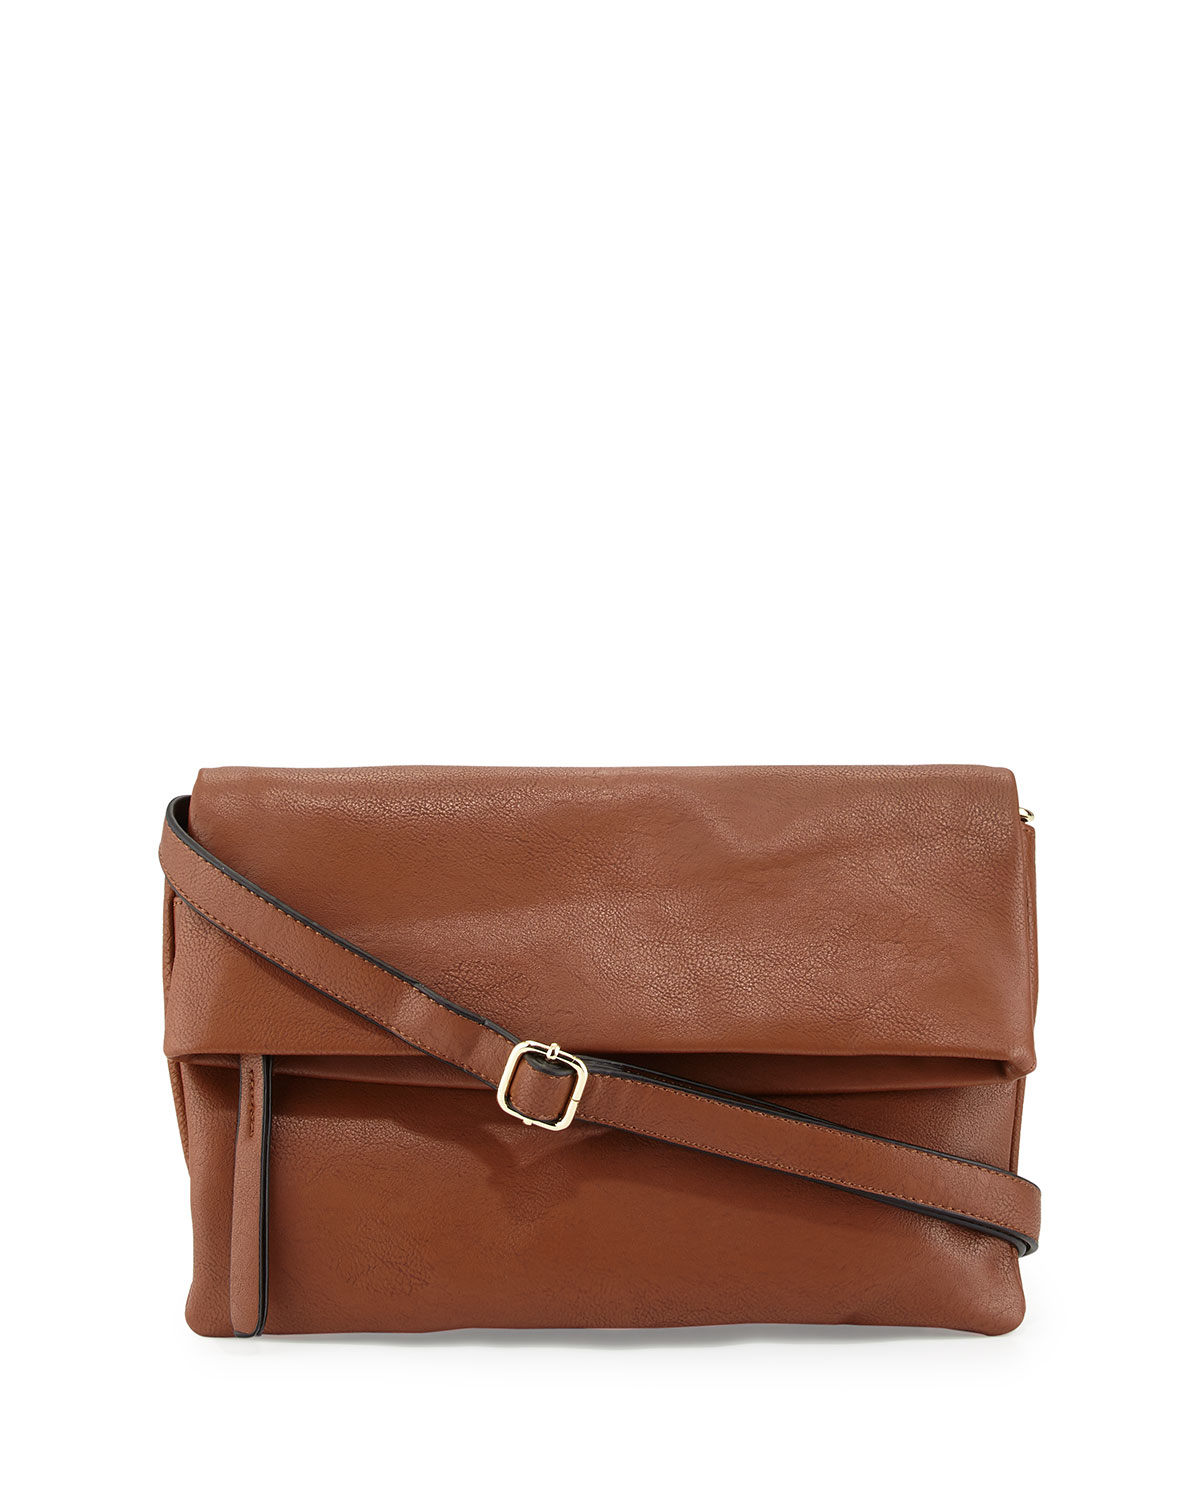 Lyst - Neiman Marcus Misto Fold-over Crossbody Bag in Brown